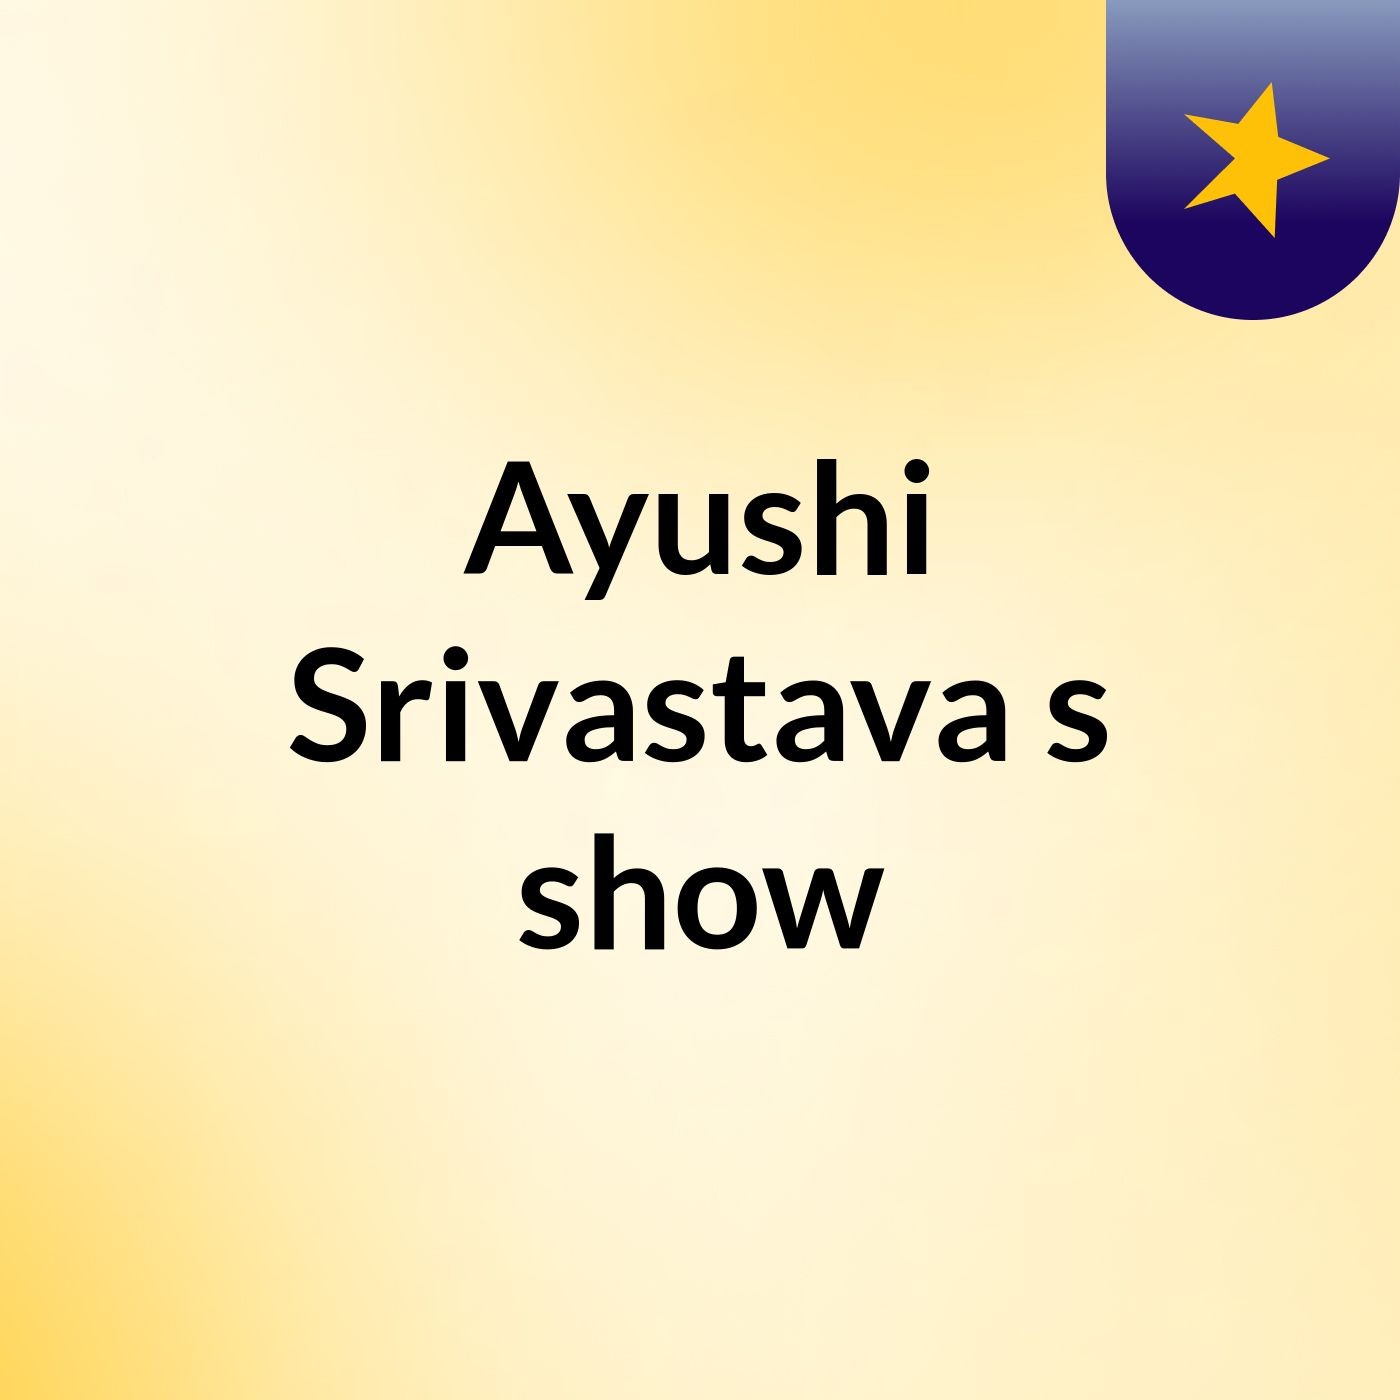 Ayushi Srivastava's show